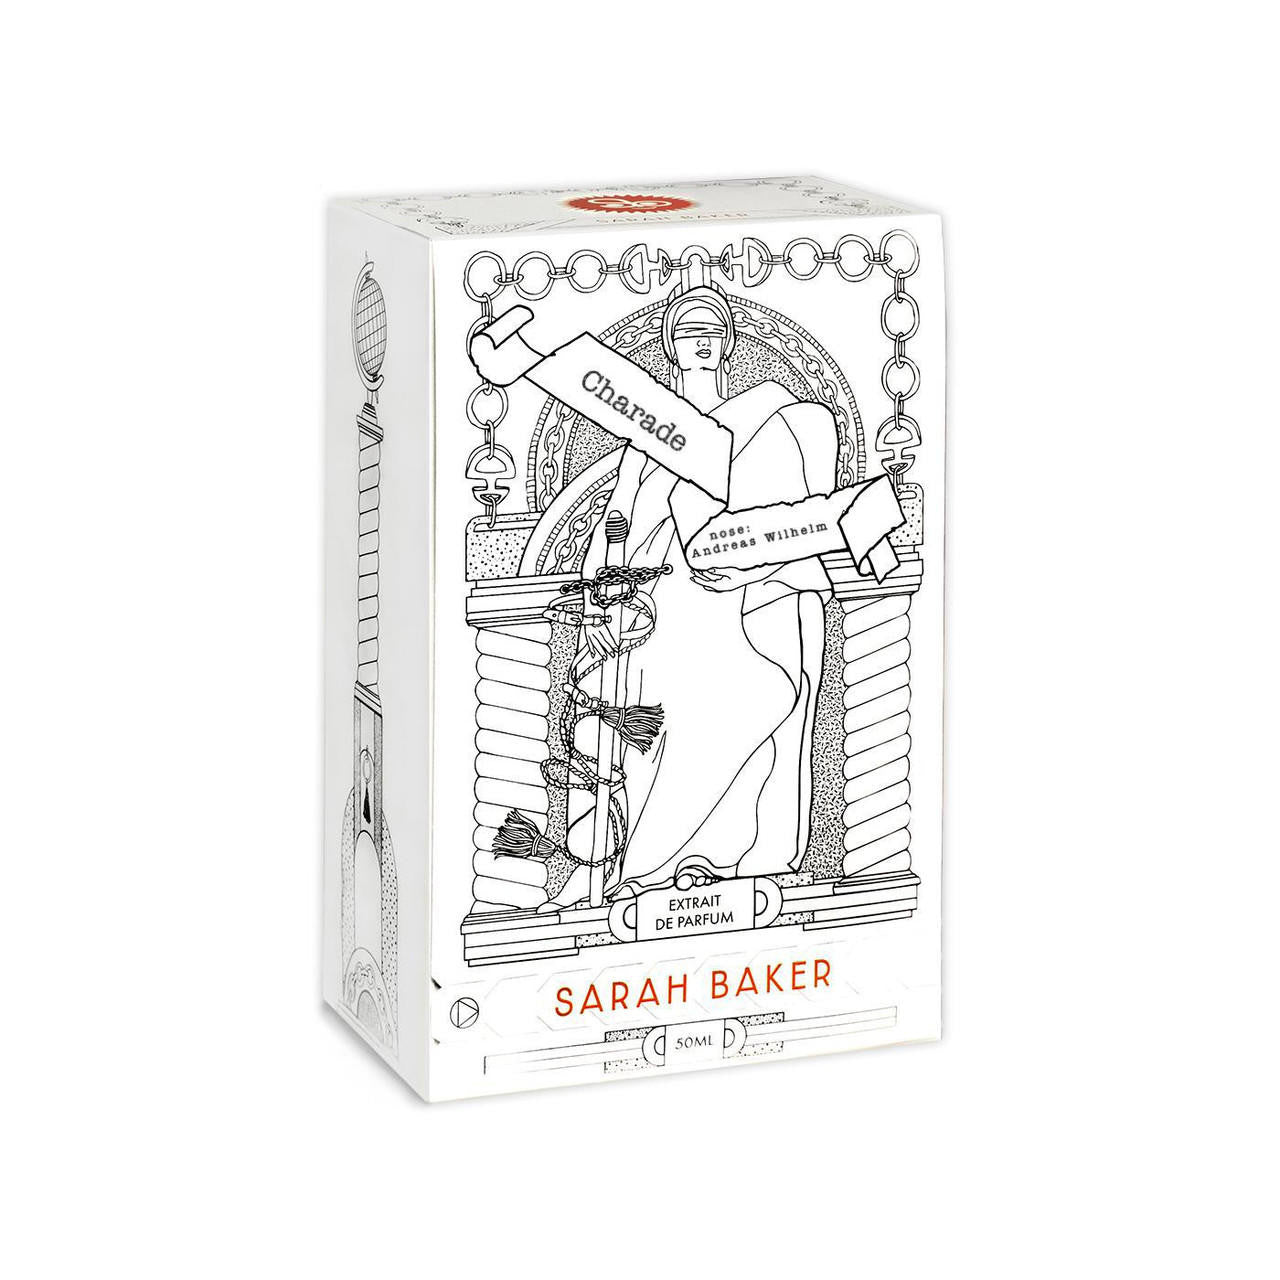  Sarah Baker Charade Extrait de Parfum 